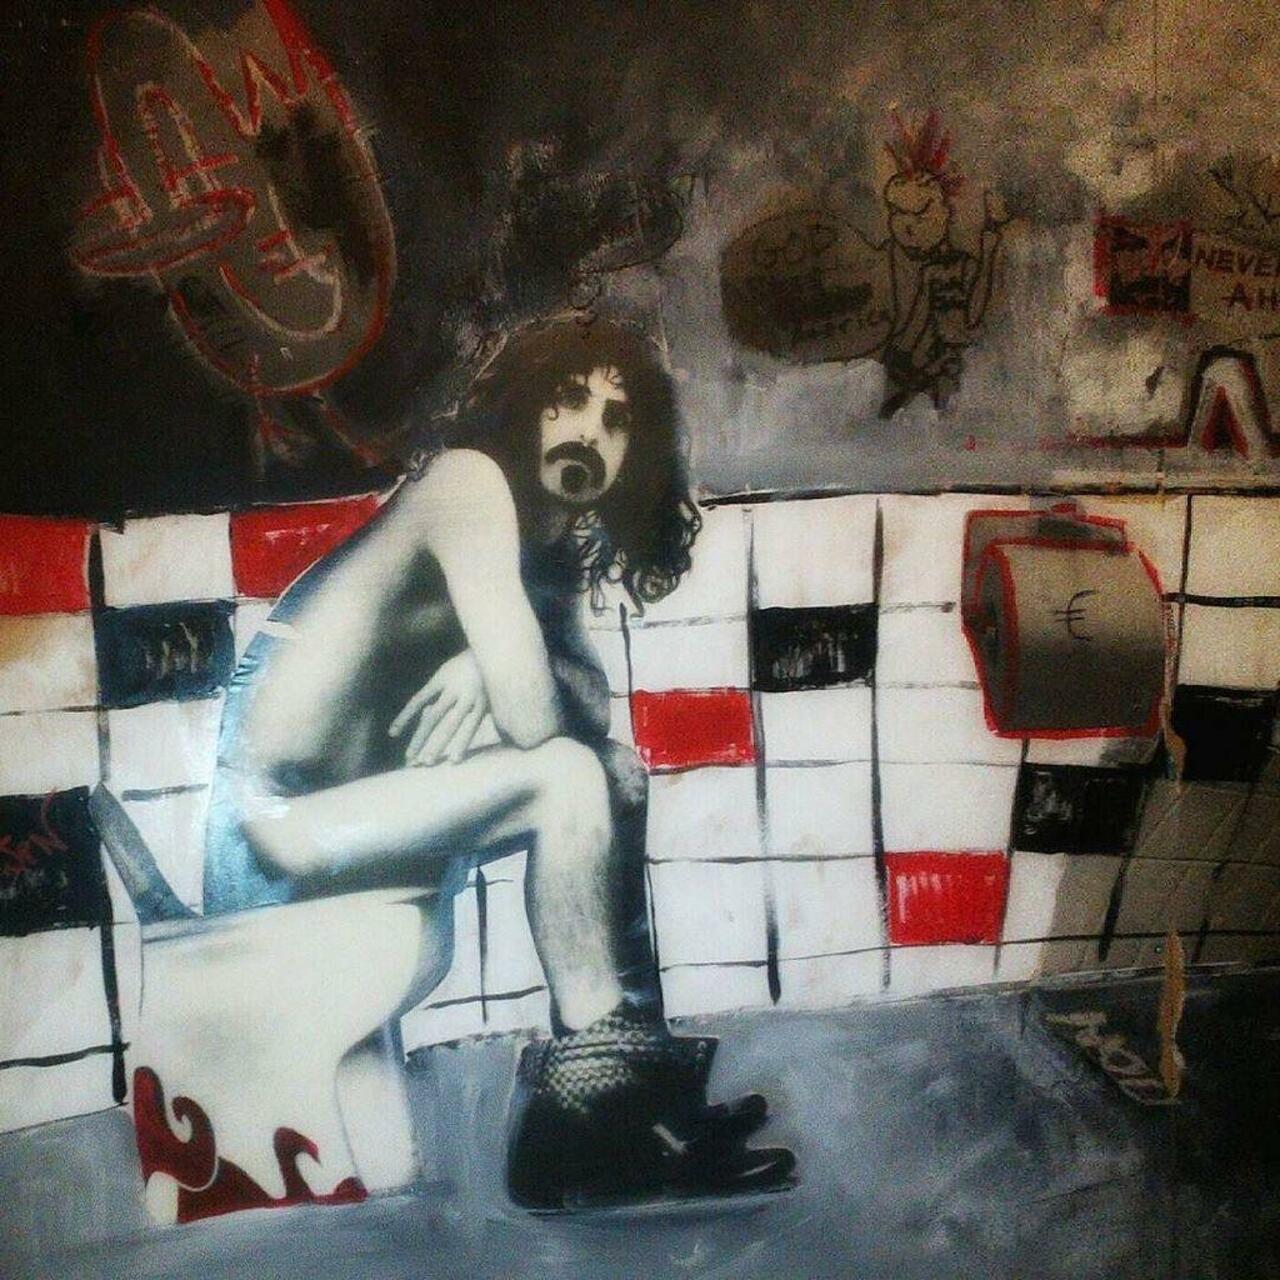 Relax and n'joy a Great Zappa graffiti at Blackbird bar, Athens
#graffiti #streetart #urba… http://ift.tt/1LnGl2c http://t.co/E6lbaA0PGh